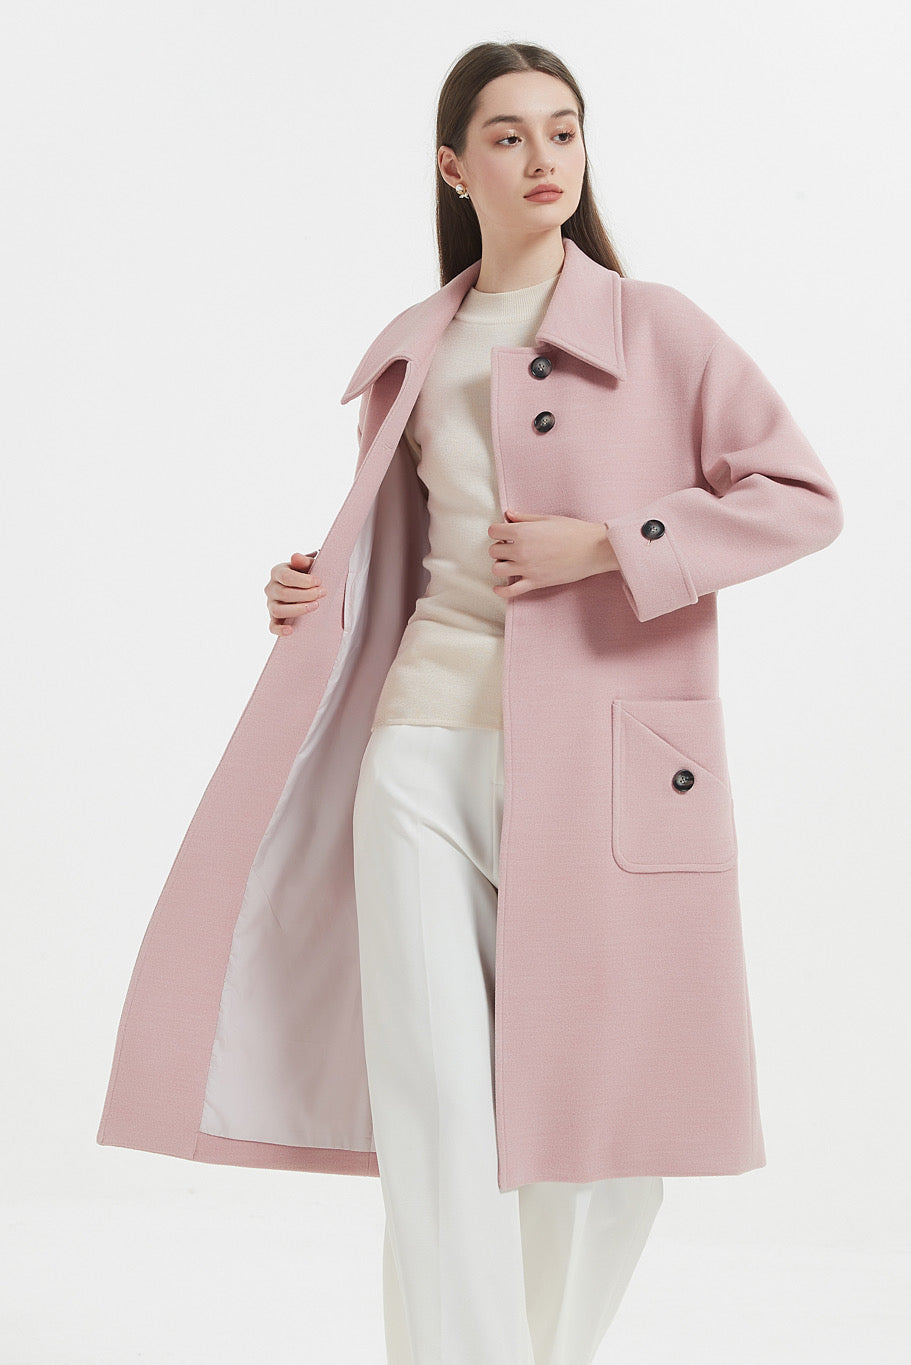 SKYE Shop Chic Modern Elegant Timeless Women Clothing French Parisian Minimalist Annabelle Long Wool Coat Pink 7